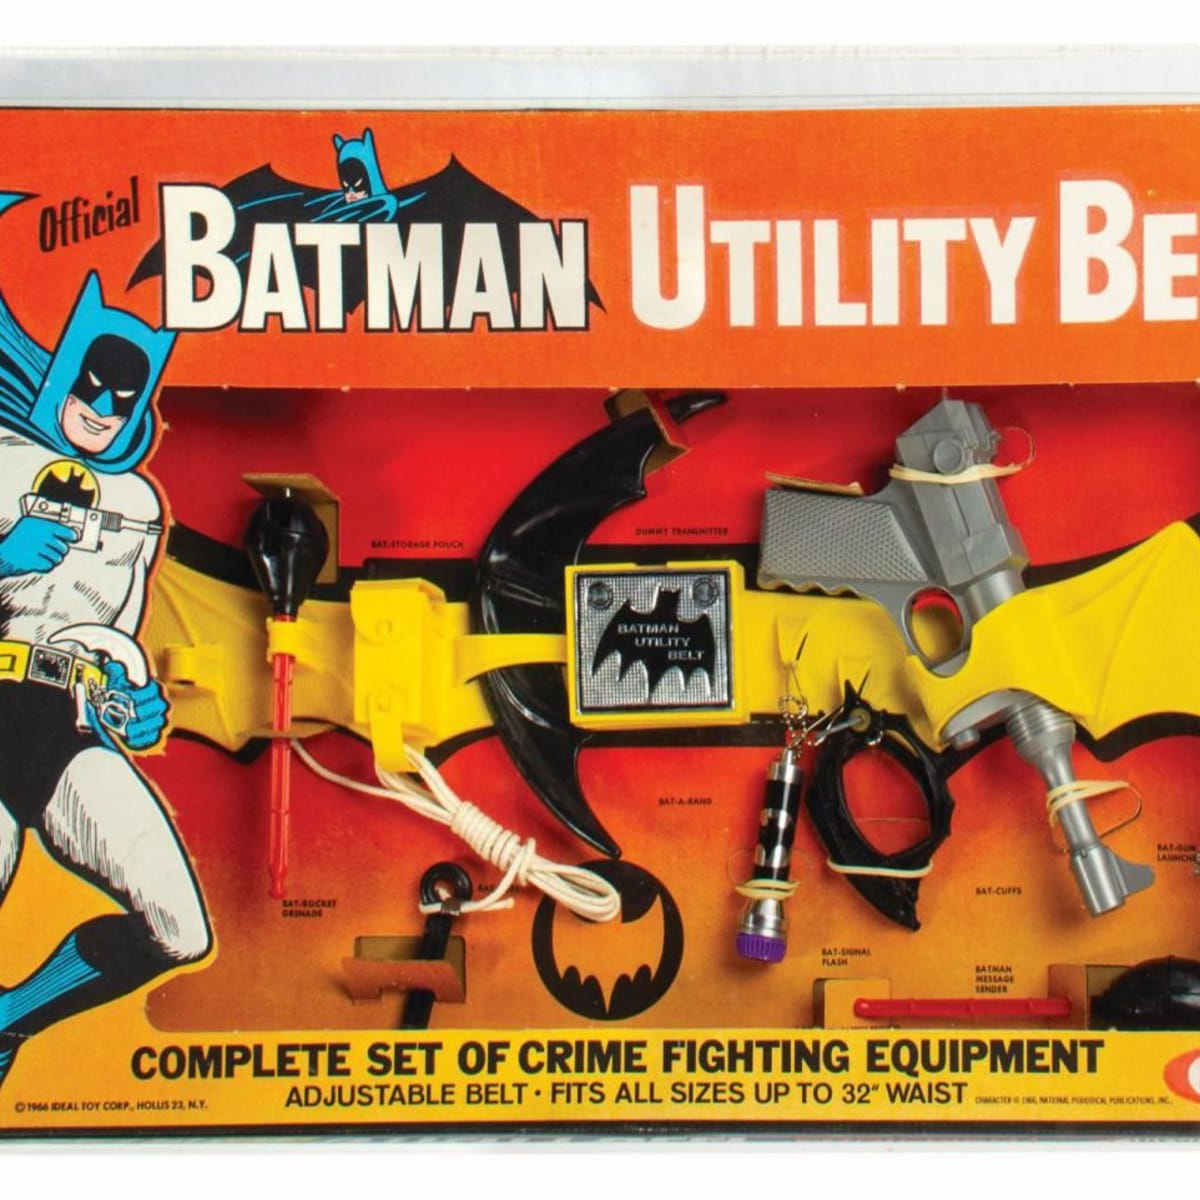 1966 Batman Utility Belt sets world record at auction. - Antique Trader